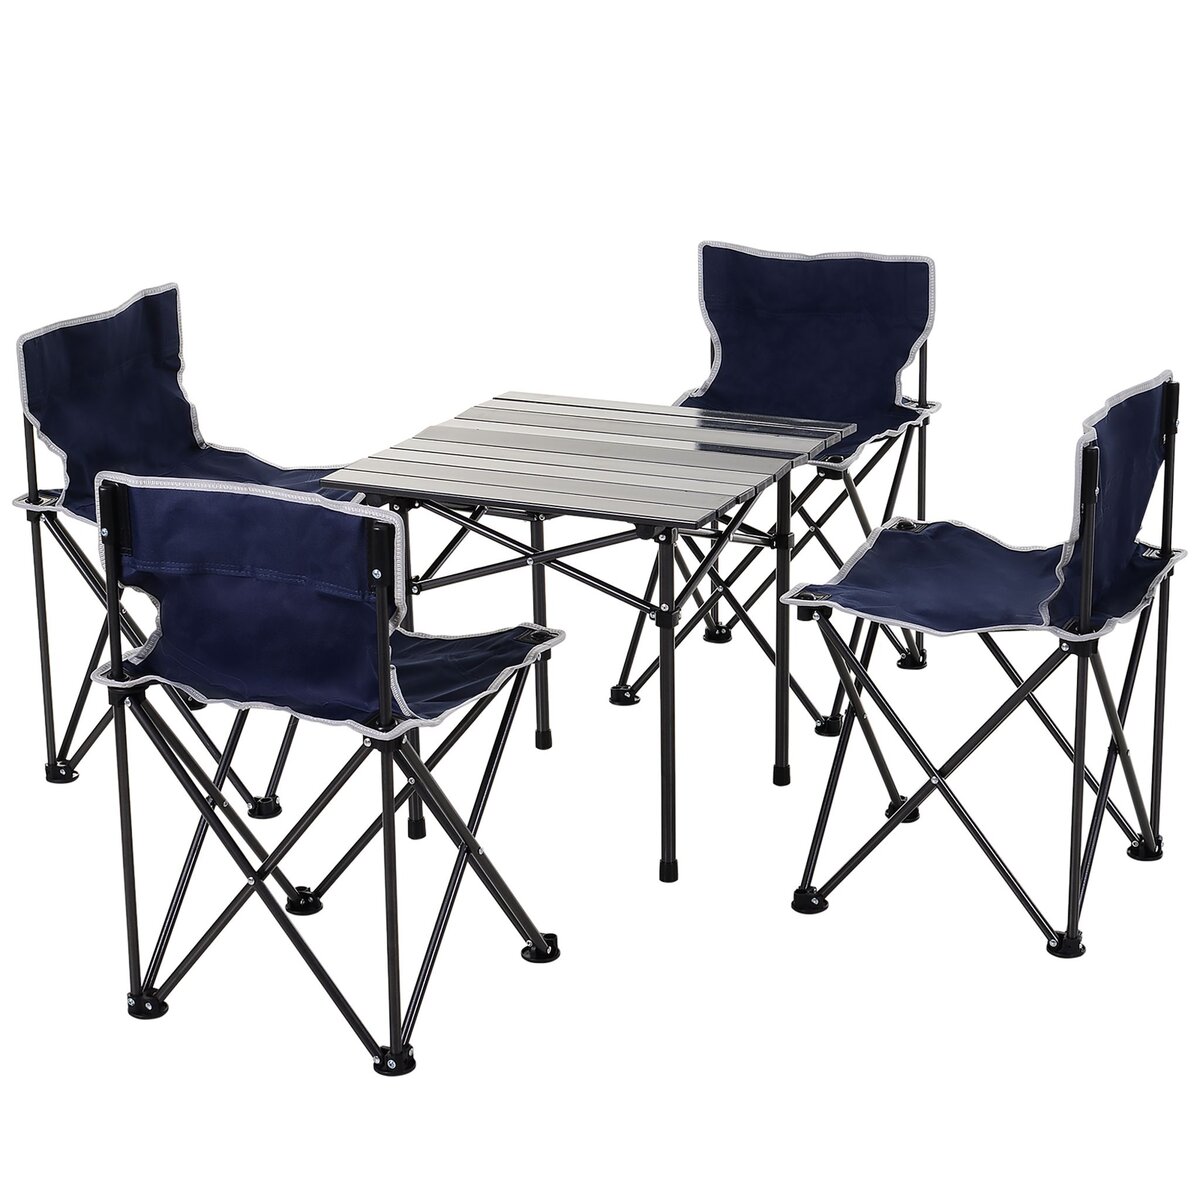 Table pliante avec 6 chaises «Fiesta»